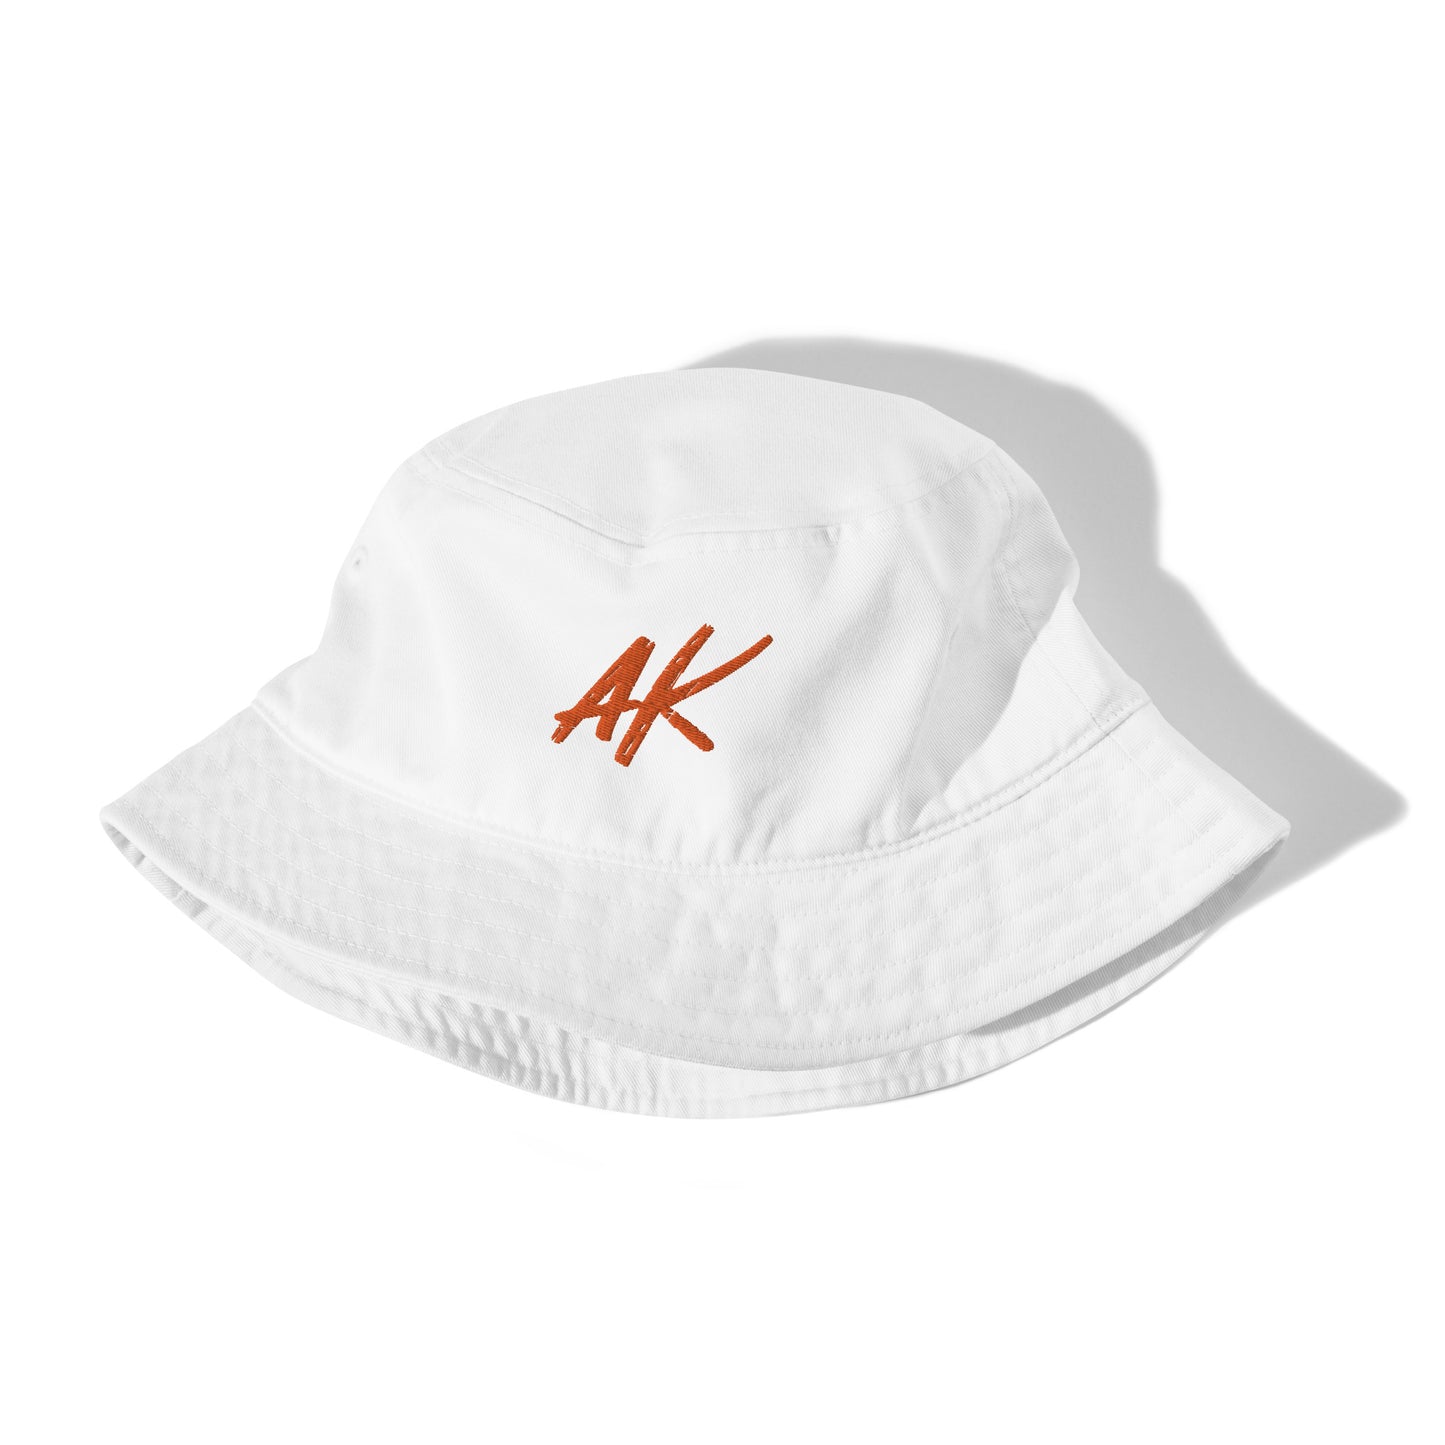 AK bucket hat (orange)